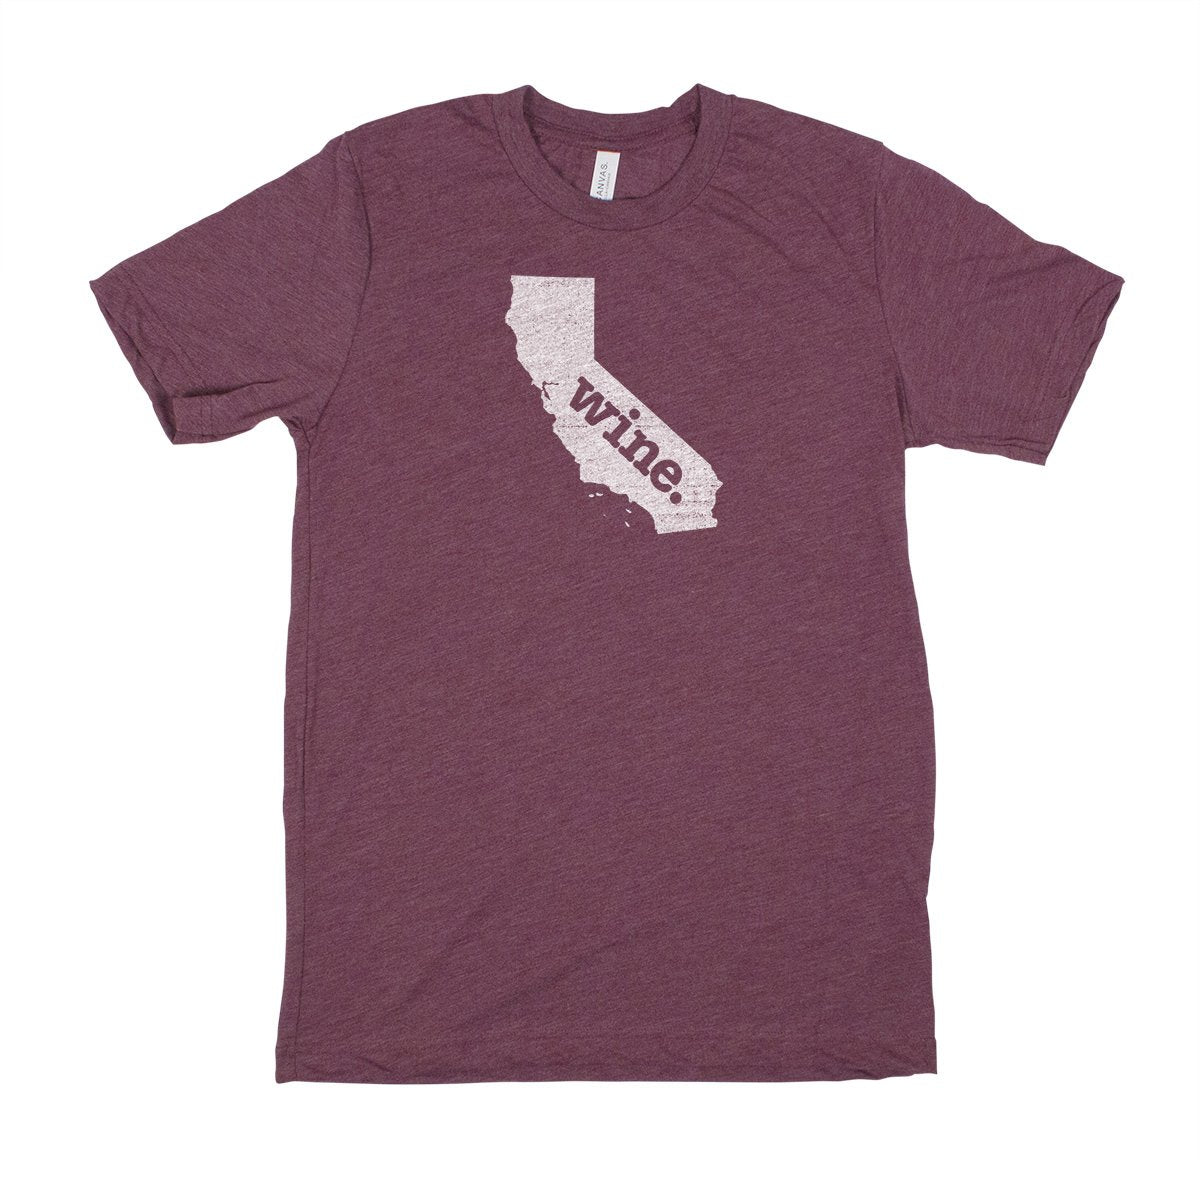 ski. Men's Unisex T-Shirt - Kansas